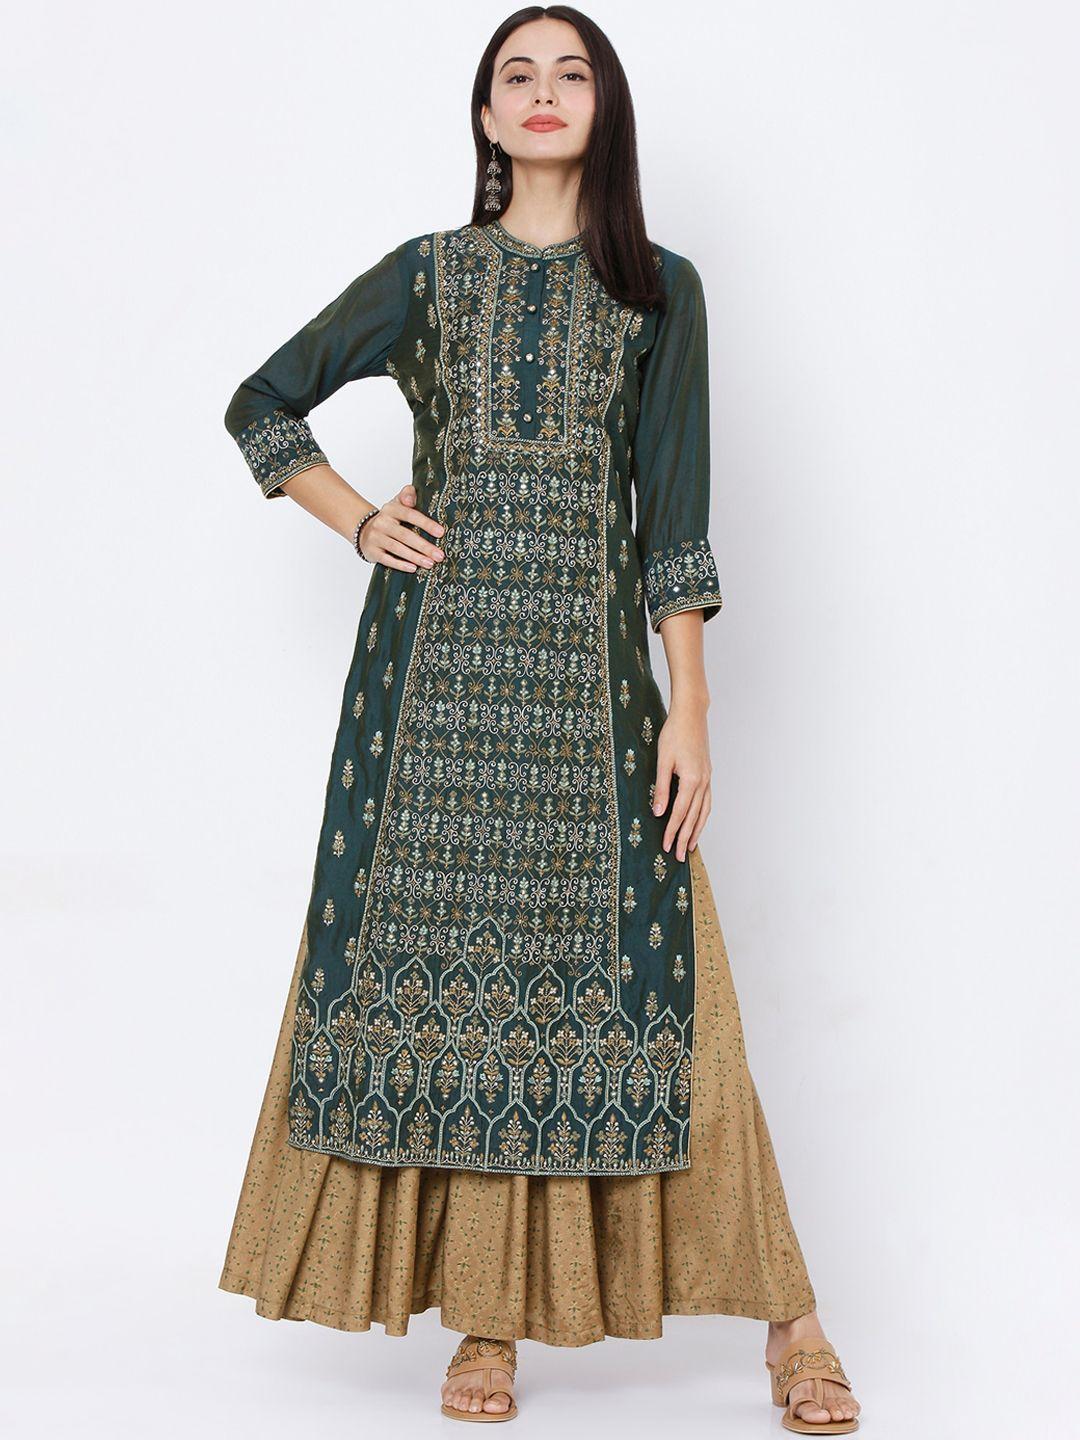 ojas designs woman navy blue ethnic motifs printed chanderi silk kurta with skirt